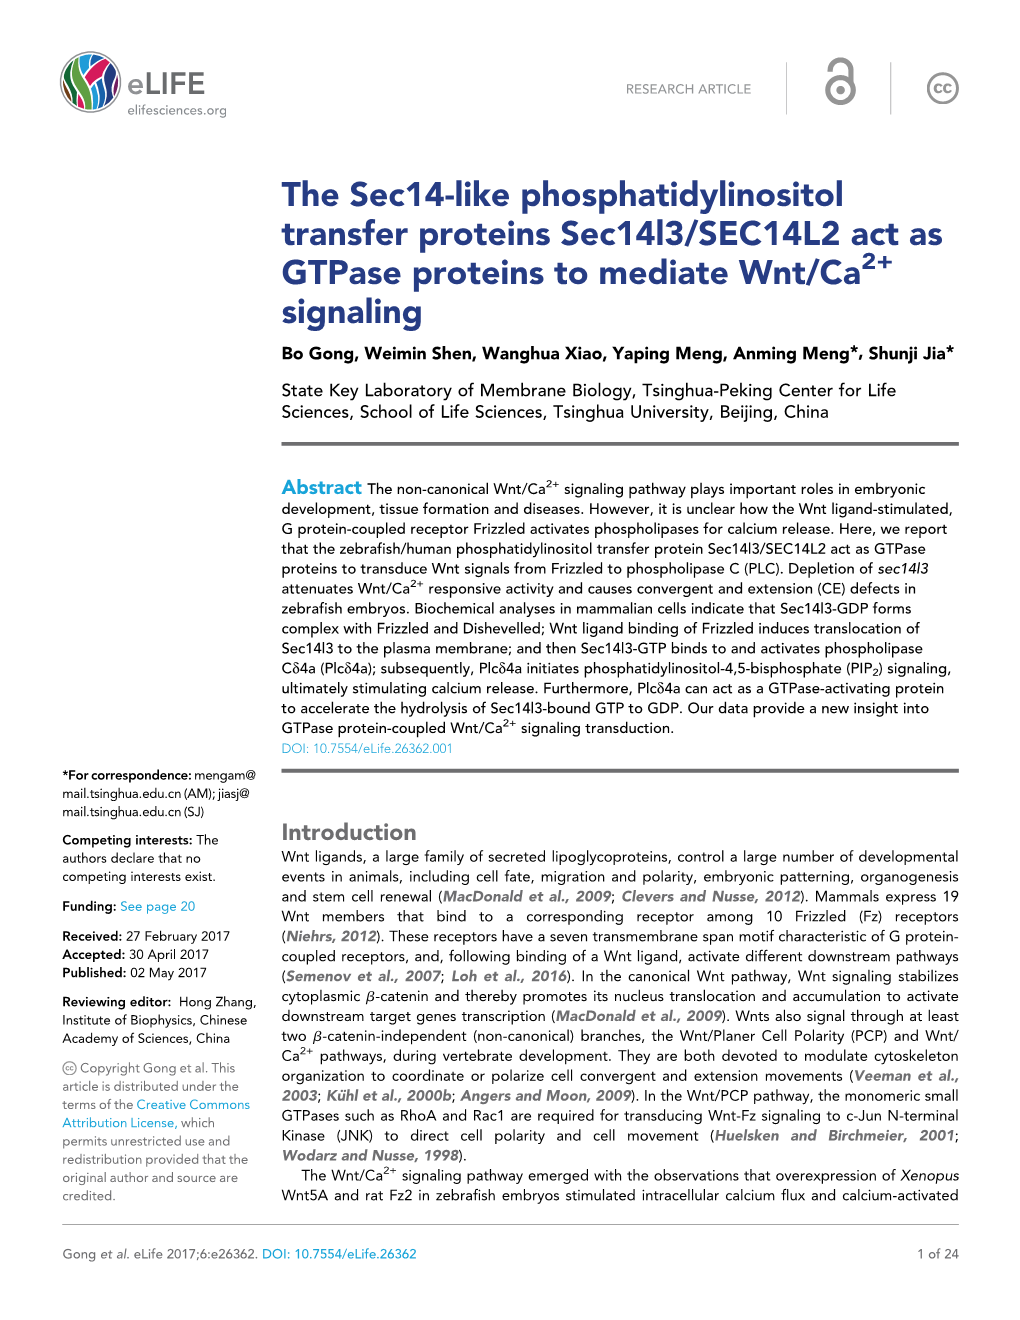 The Sec14-Like Phosphatidylinositol Transfer Proteins Sec14l3/SEC14L2